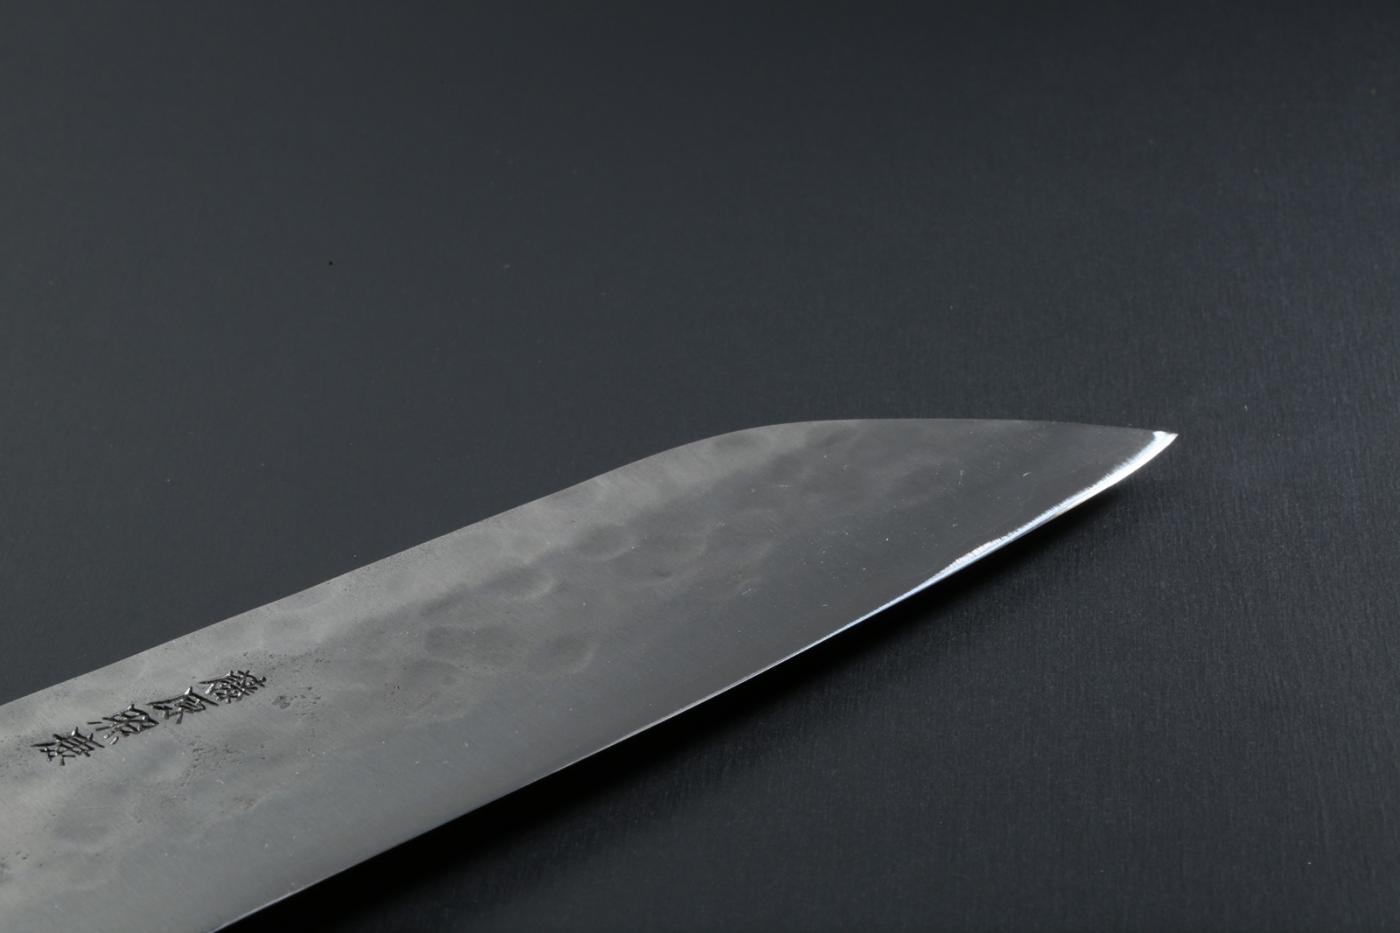 Santoku knife [Maboroshi] + Octagonal handle with buffalo horn ferrule